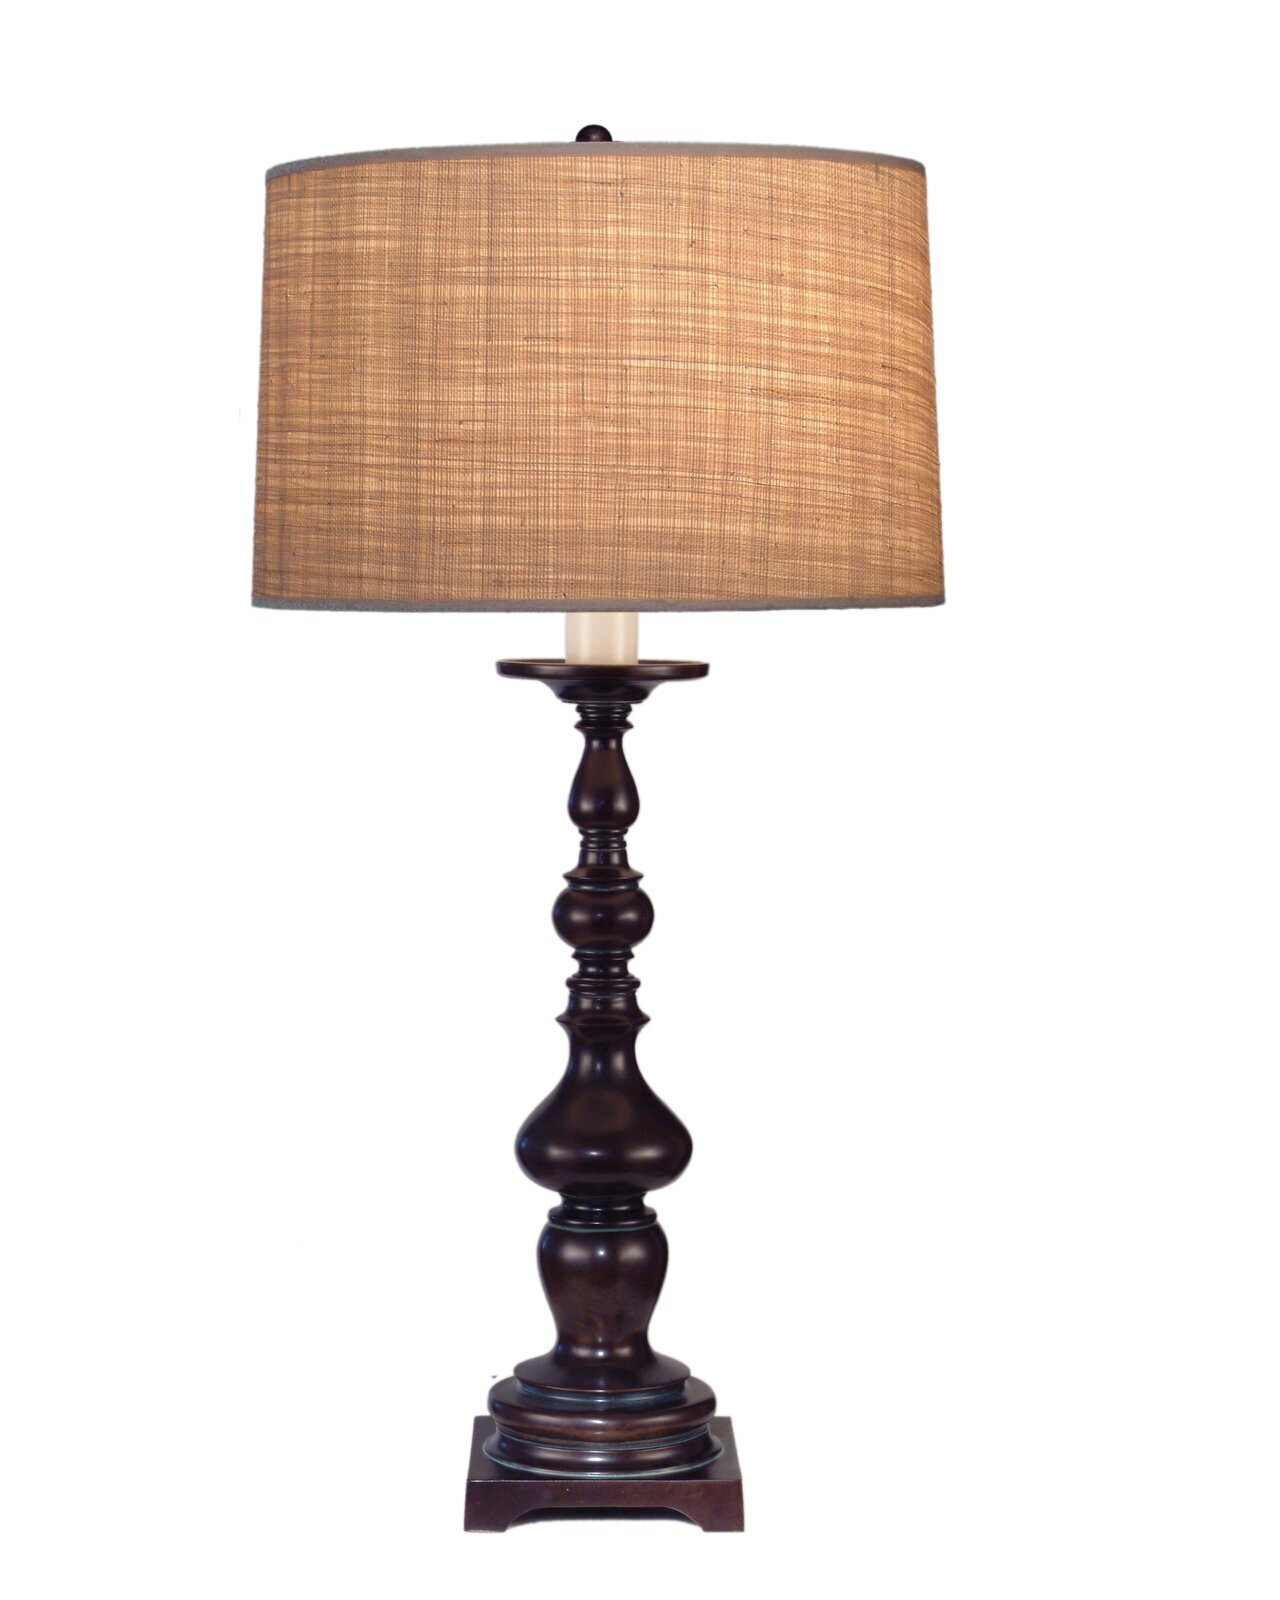 Stiffel lamps vintage for a warmer palette